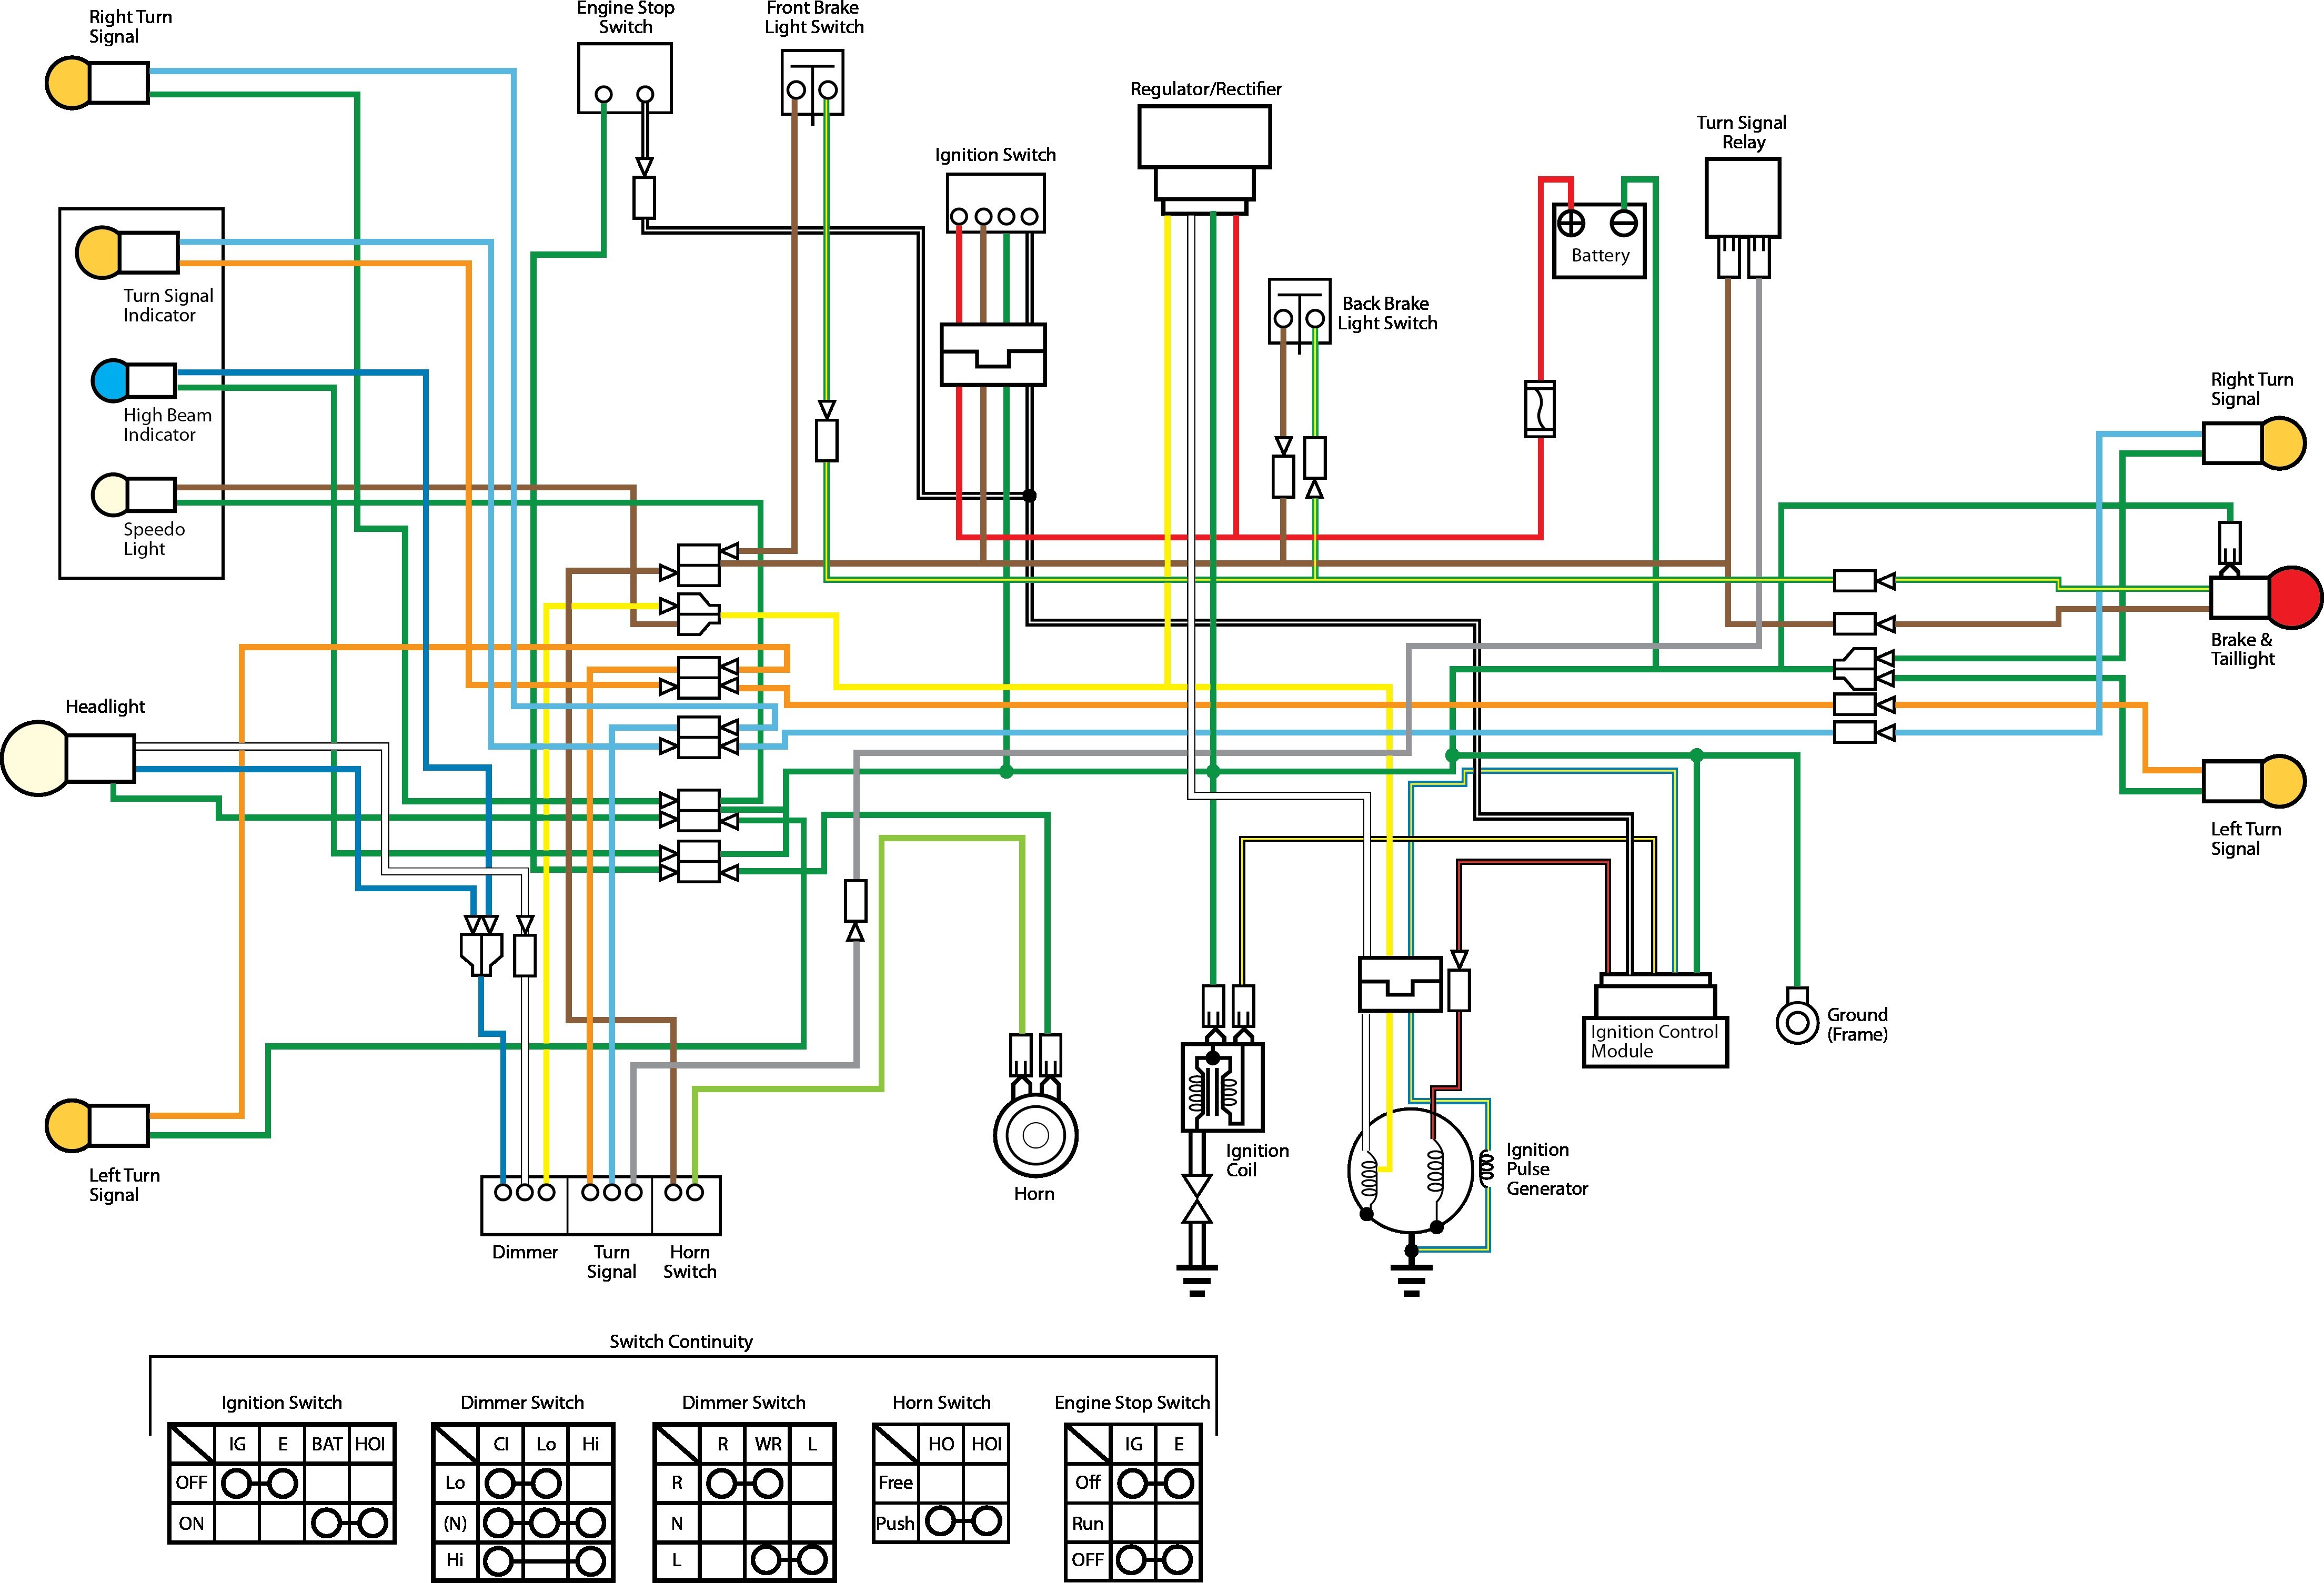 Honda C90 Engine Diagram Honda C90 Wiring Diagram 12v Wiring Diagrams Konsult Of Honda C90 Engine Diagram